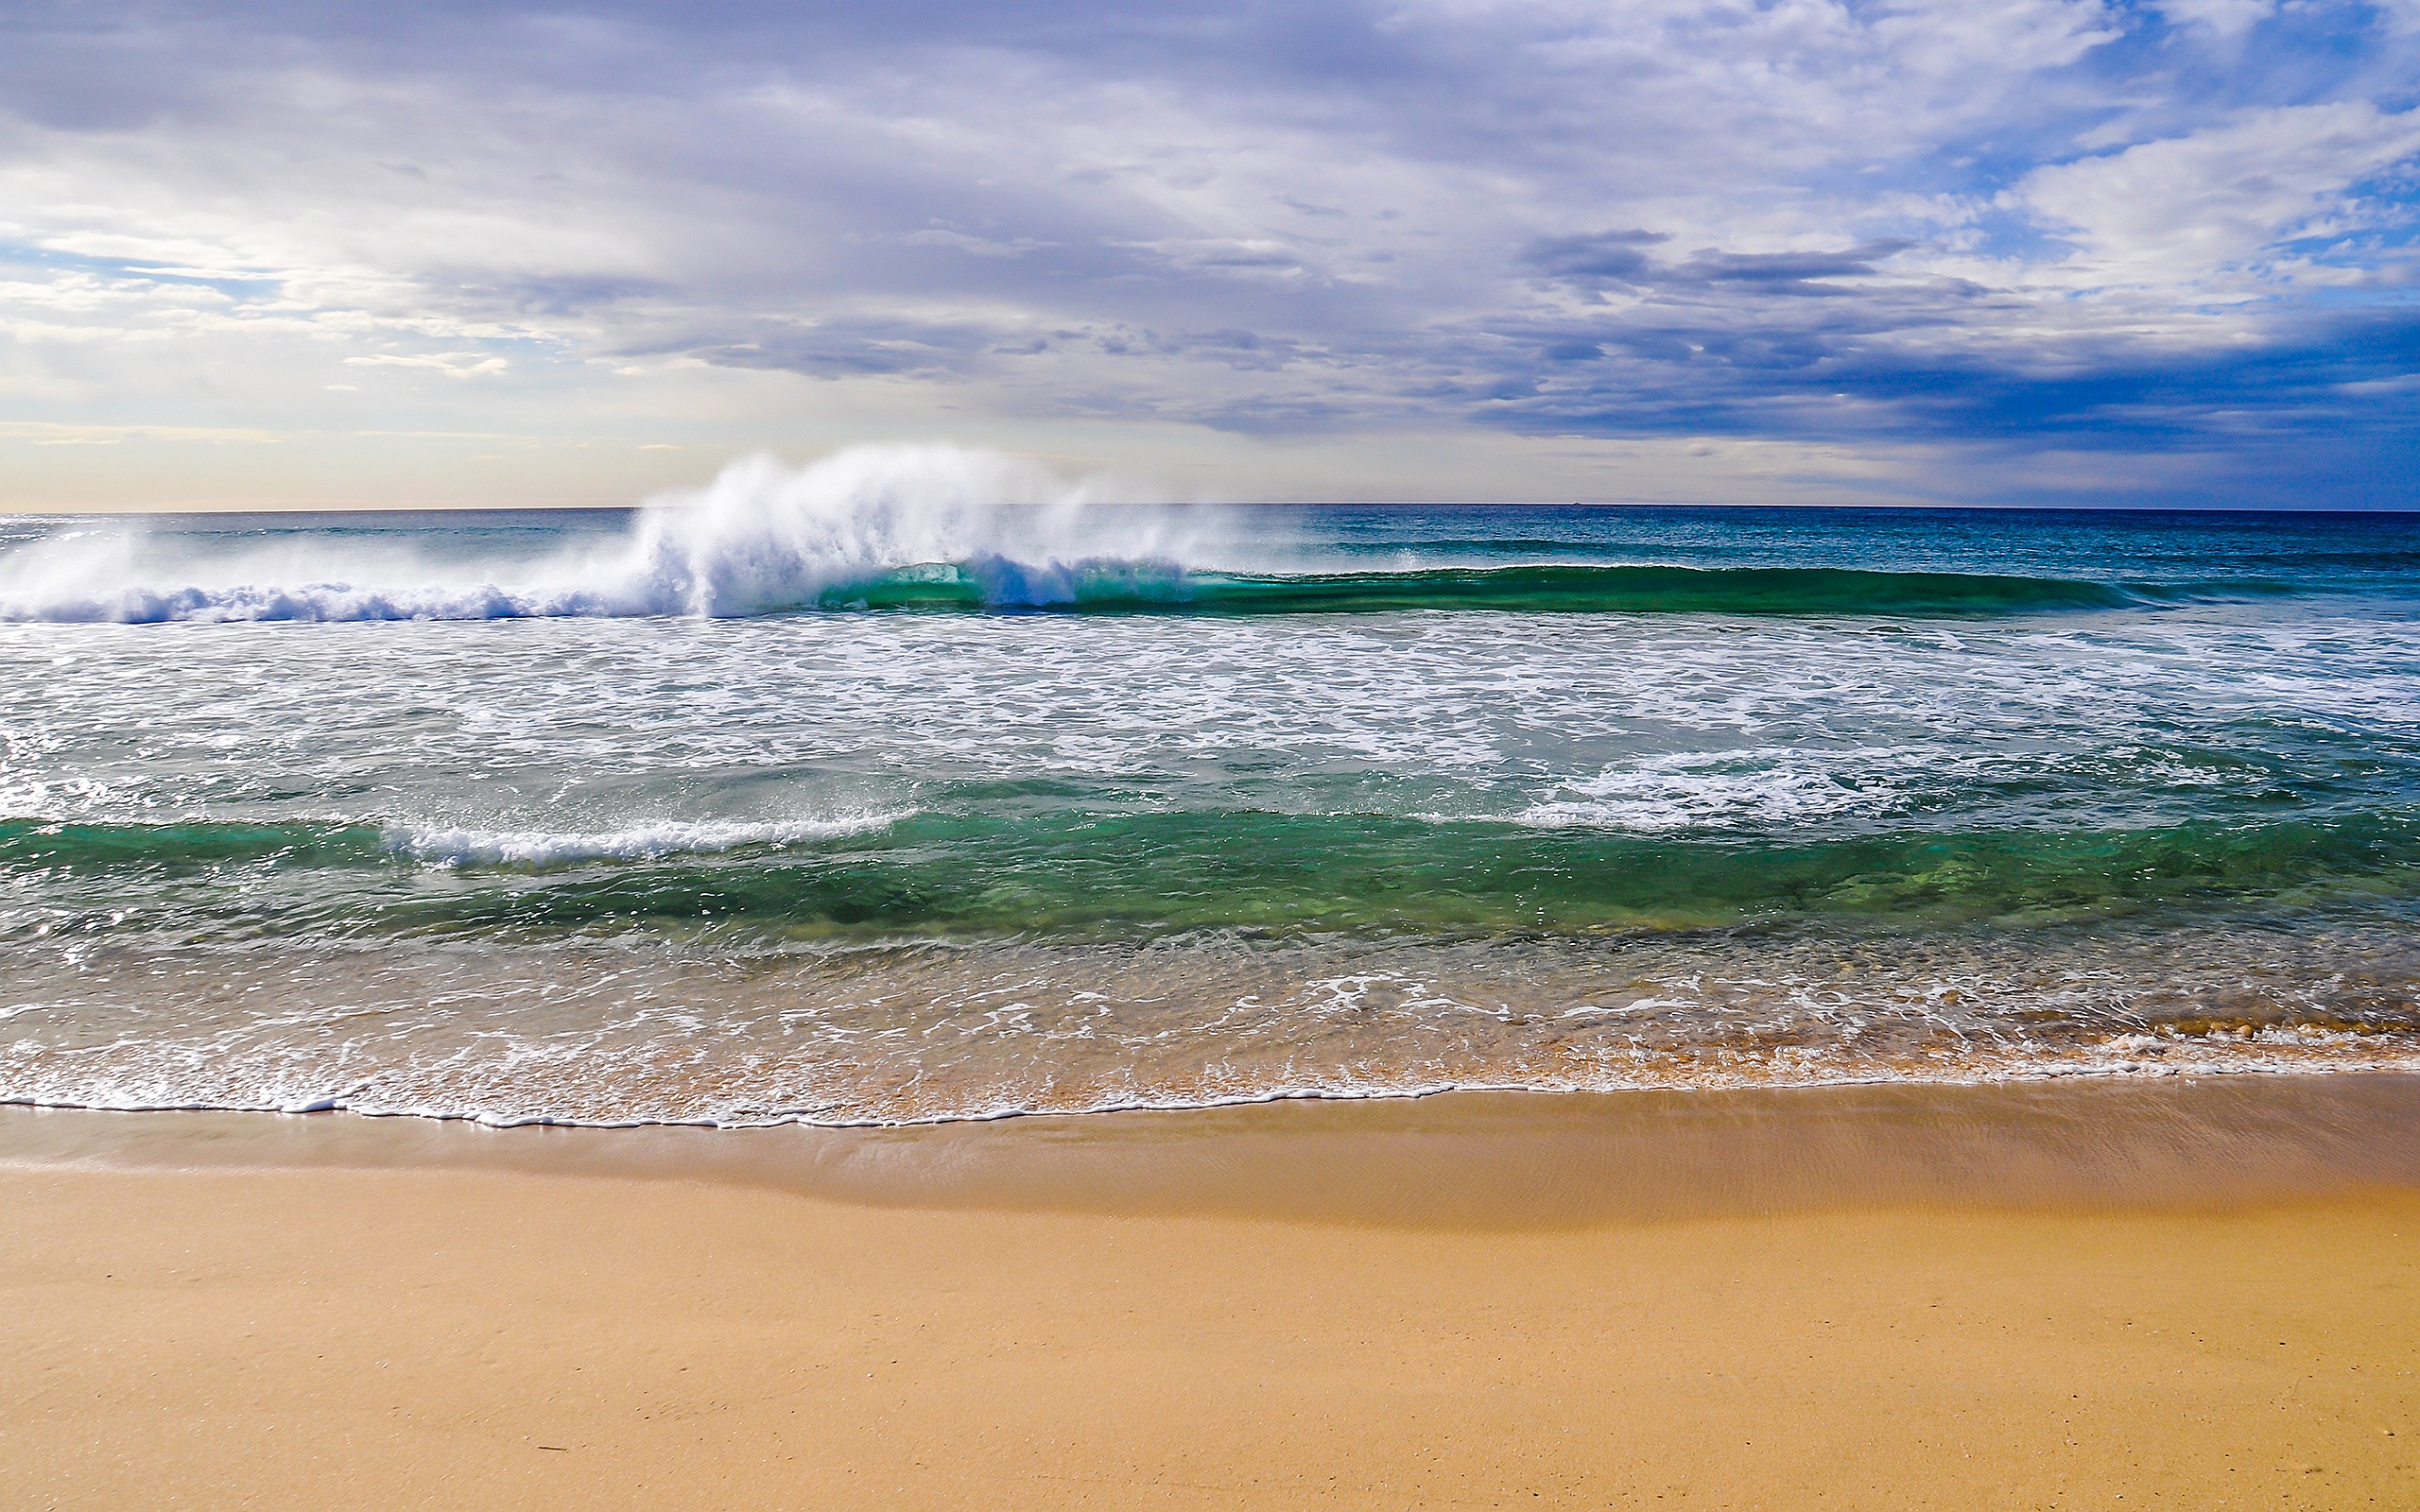 Abstract Waves · Beach Waves · Beach Waves ...